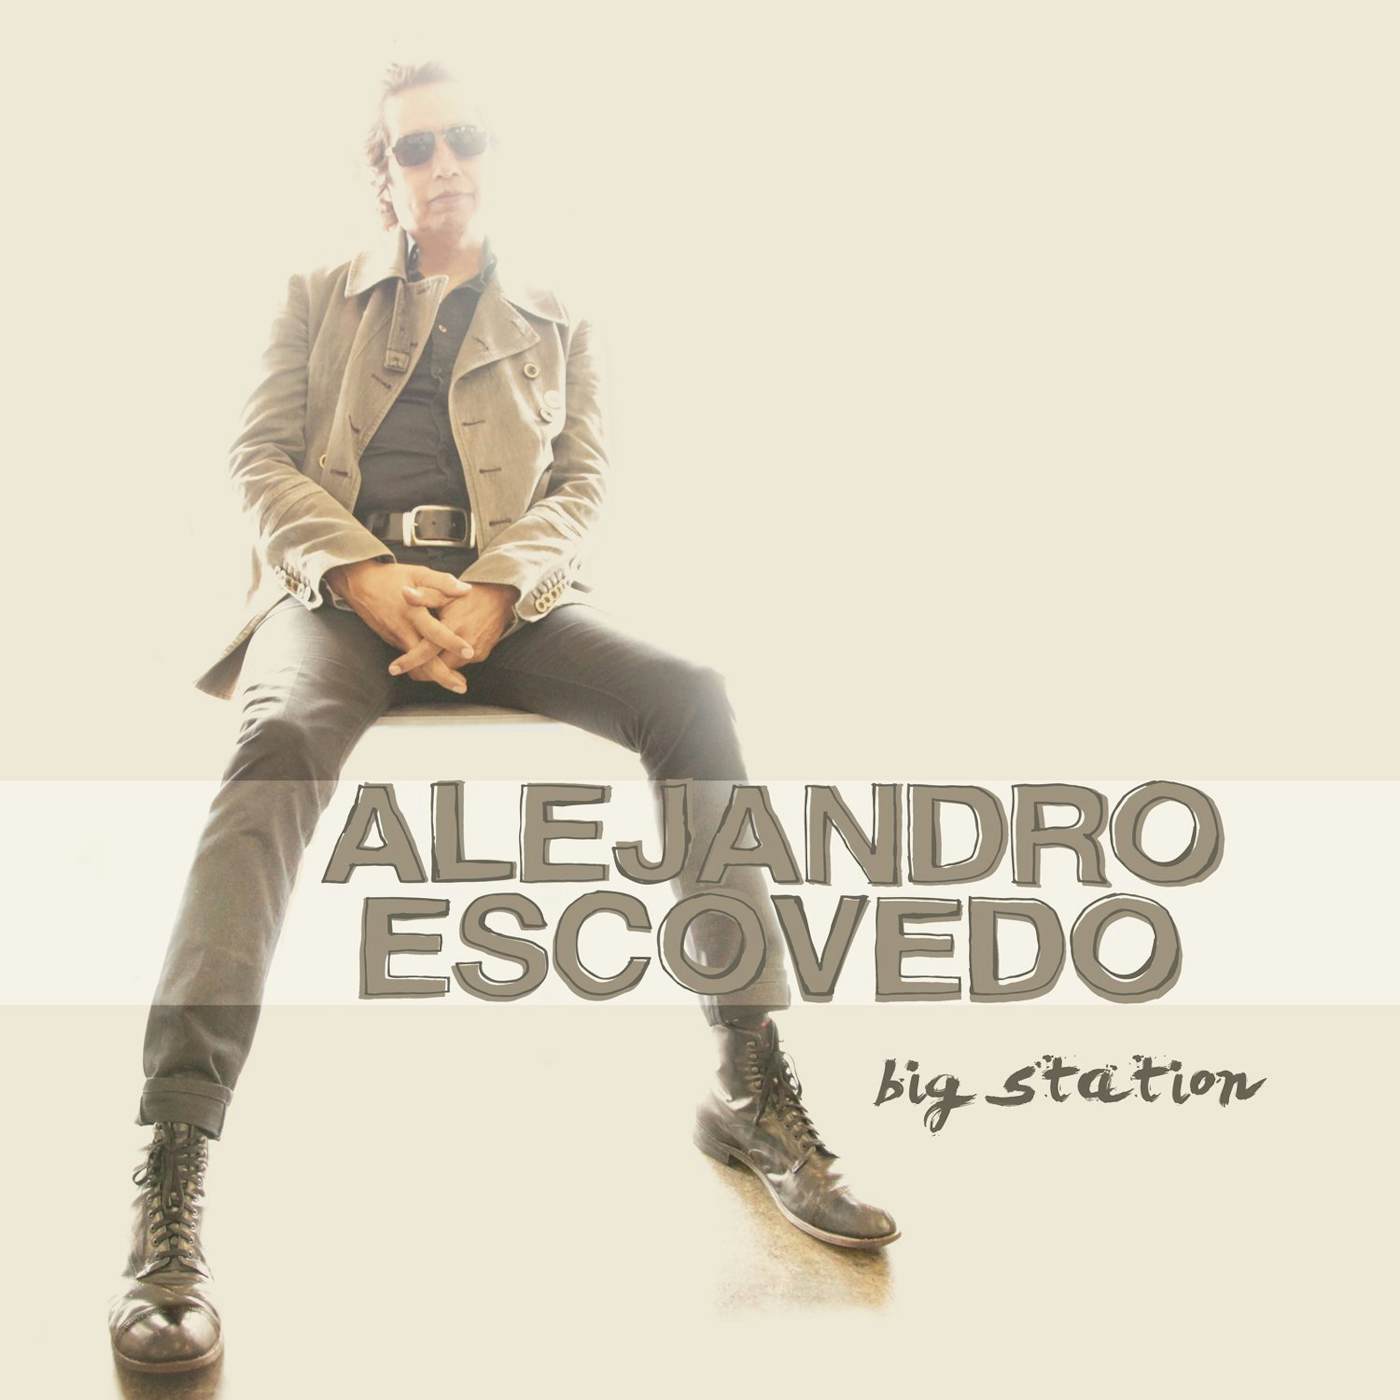 Alejandro Escovedo Big Station Vinyl Record